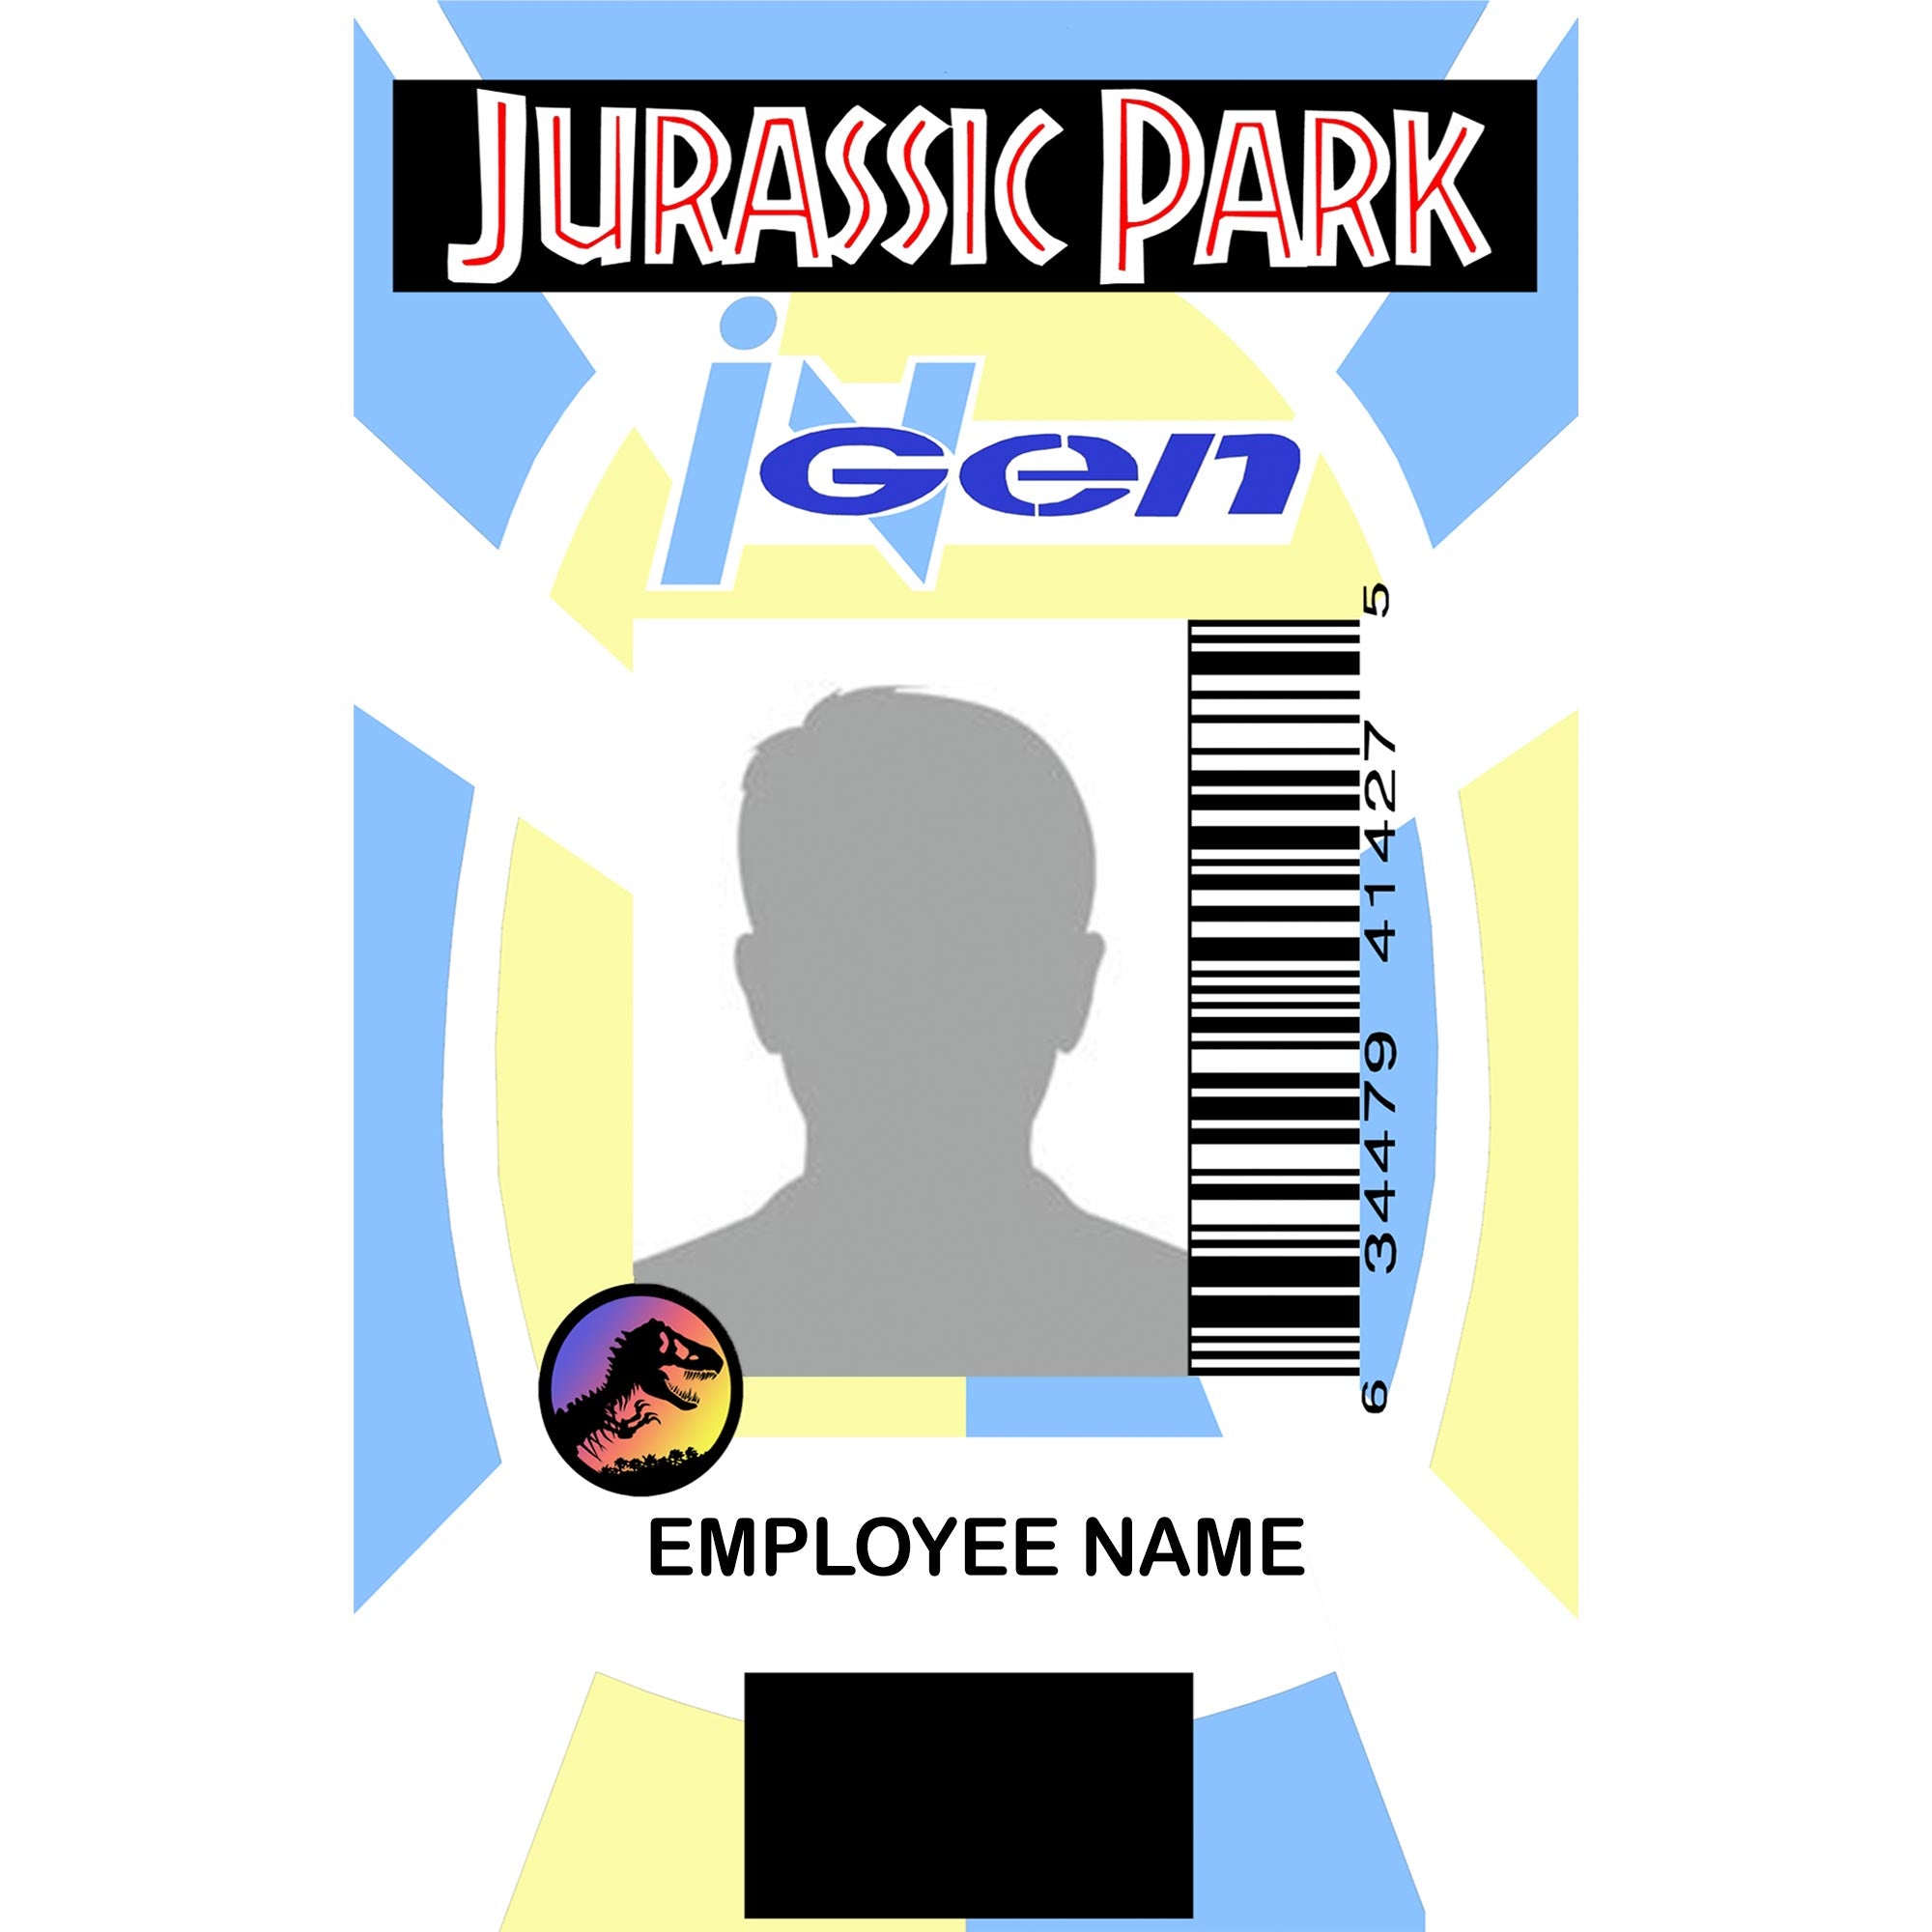 Jurassic Park Employee ID Badge Mail napmexico mx